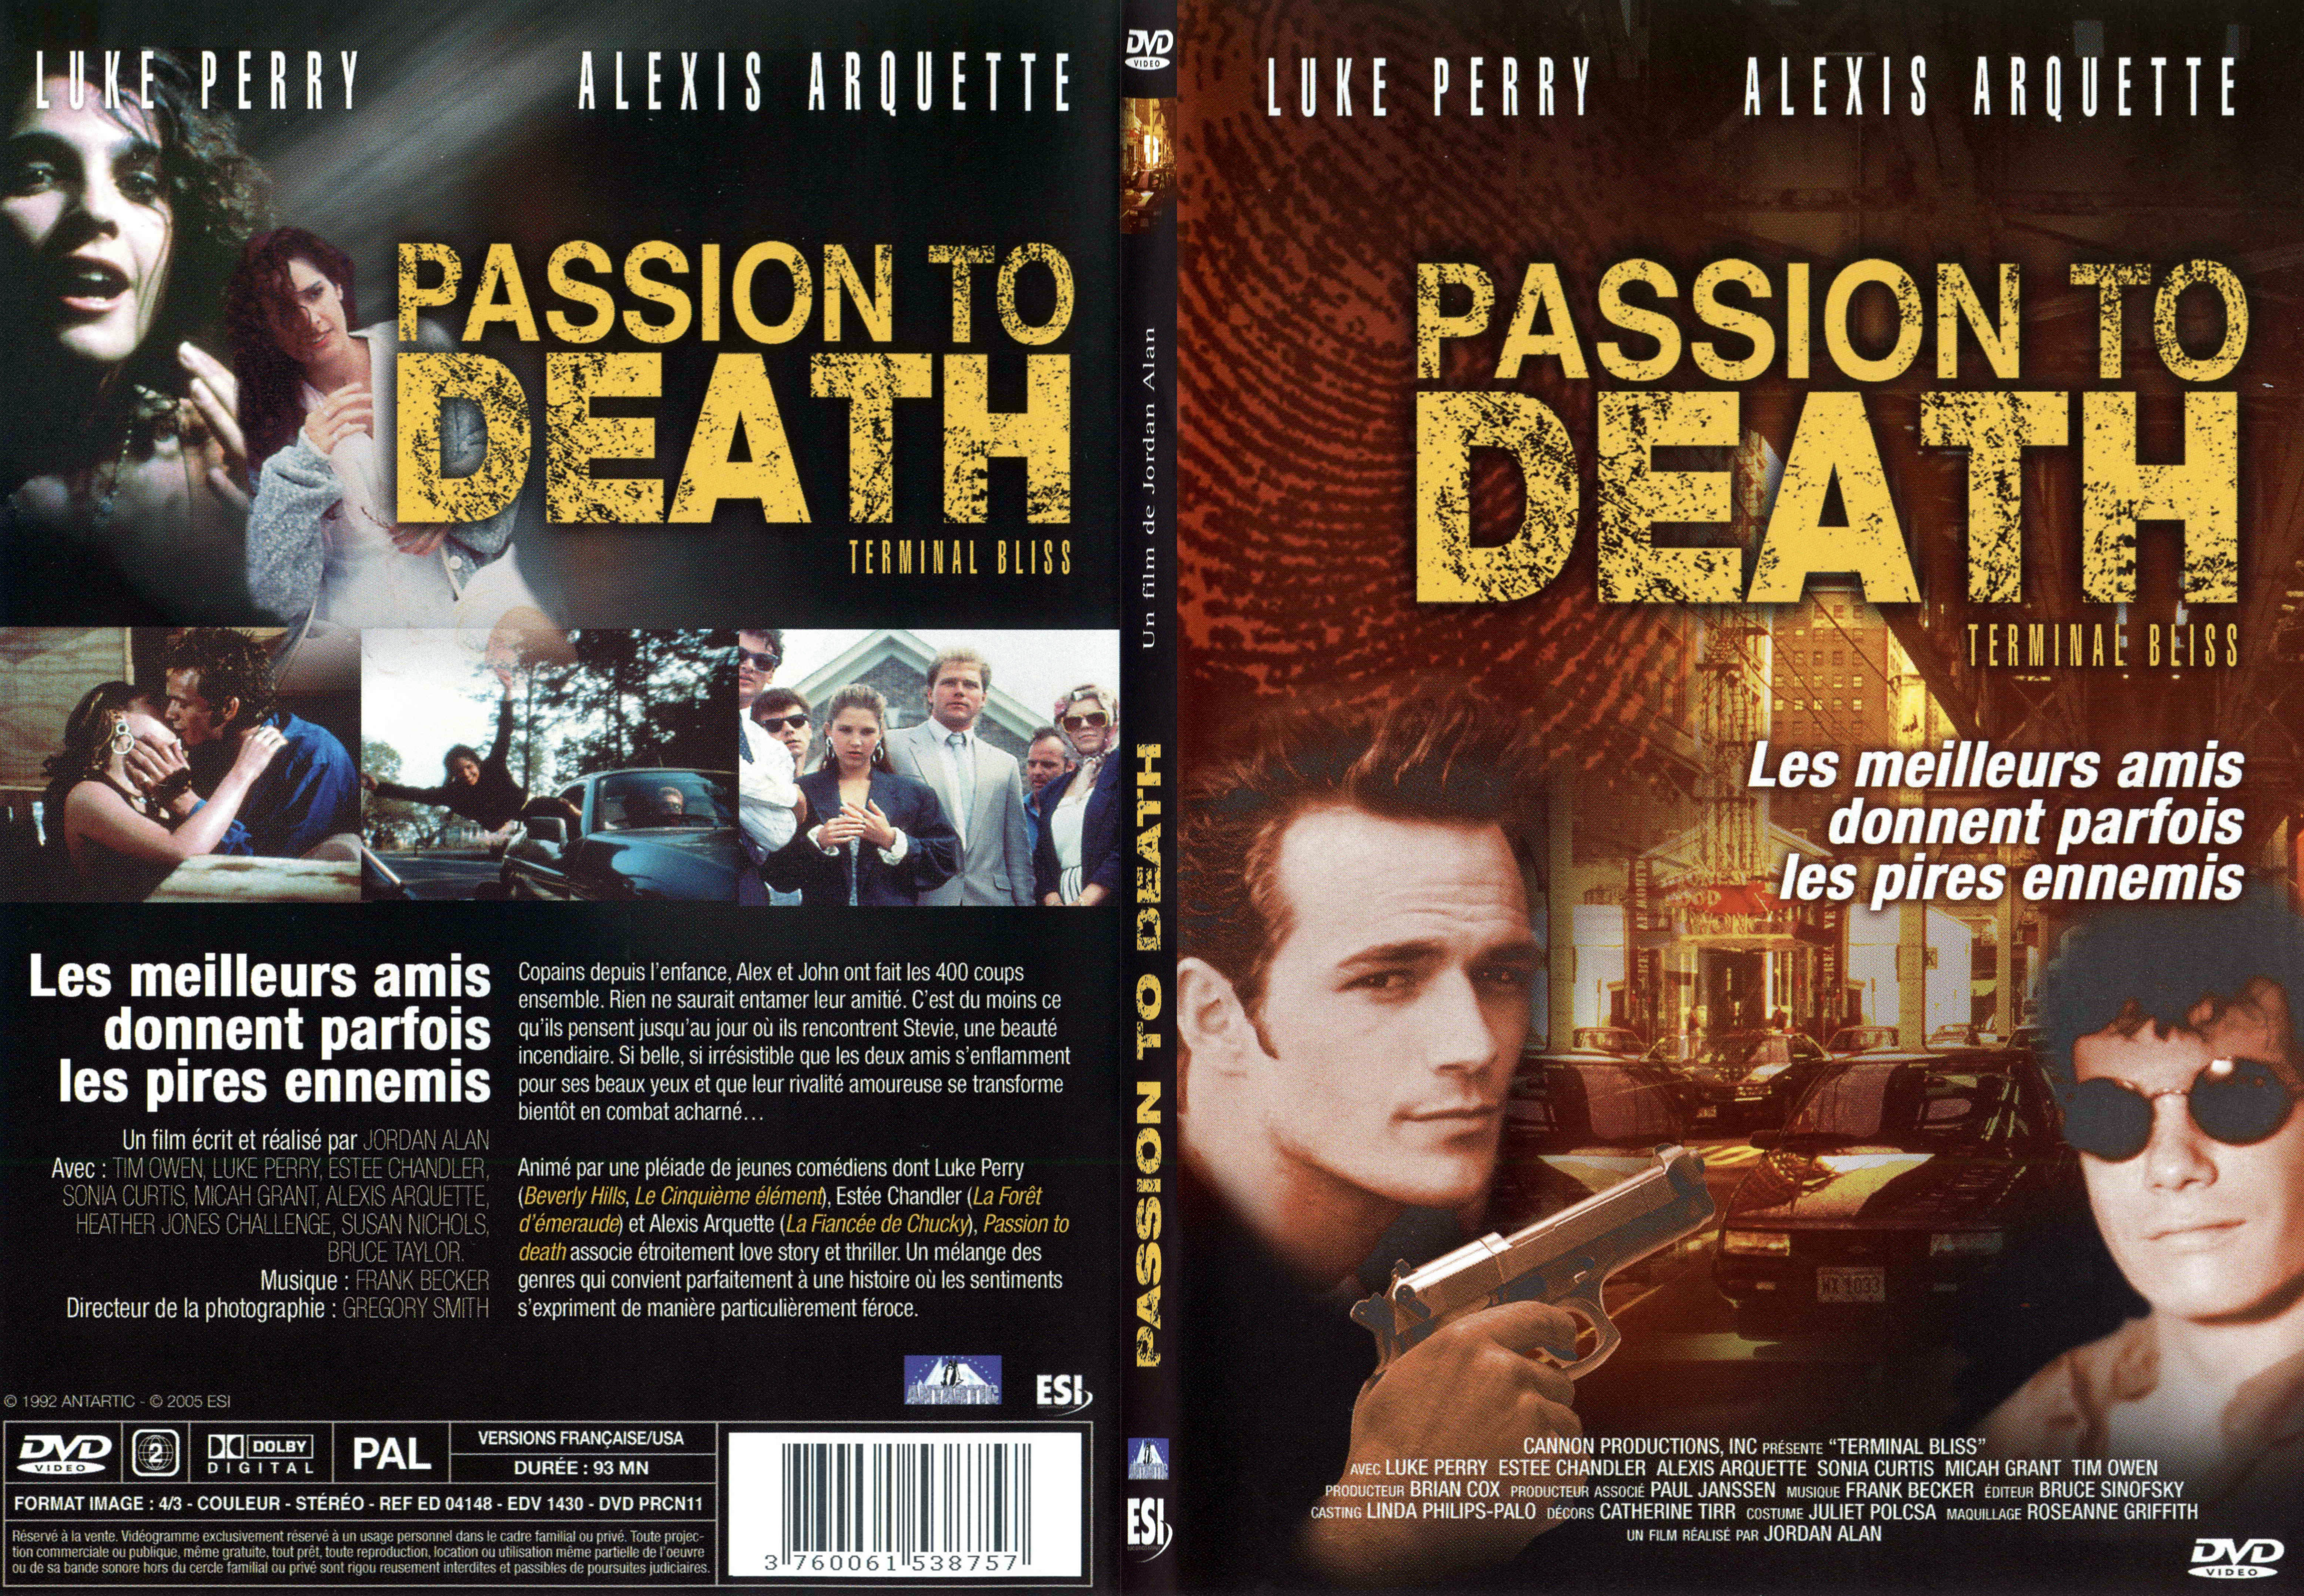 Jaquette DVD Passion to death - SLIM